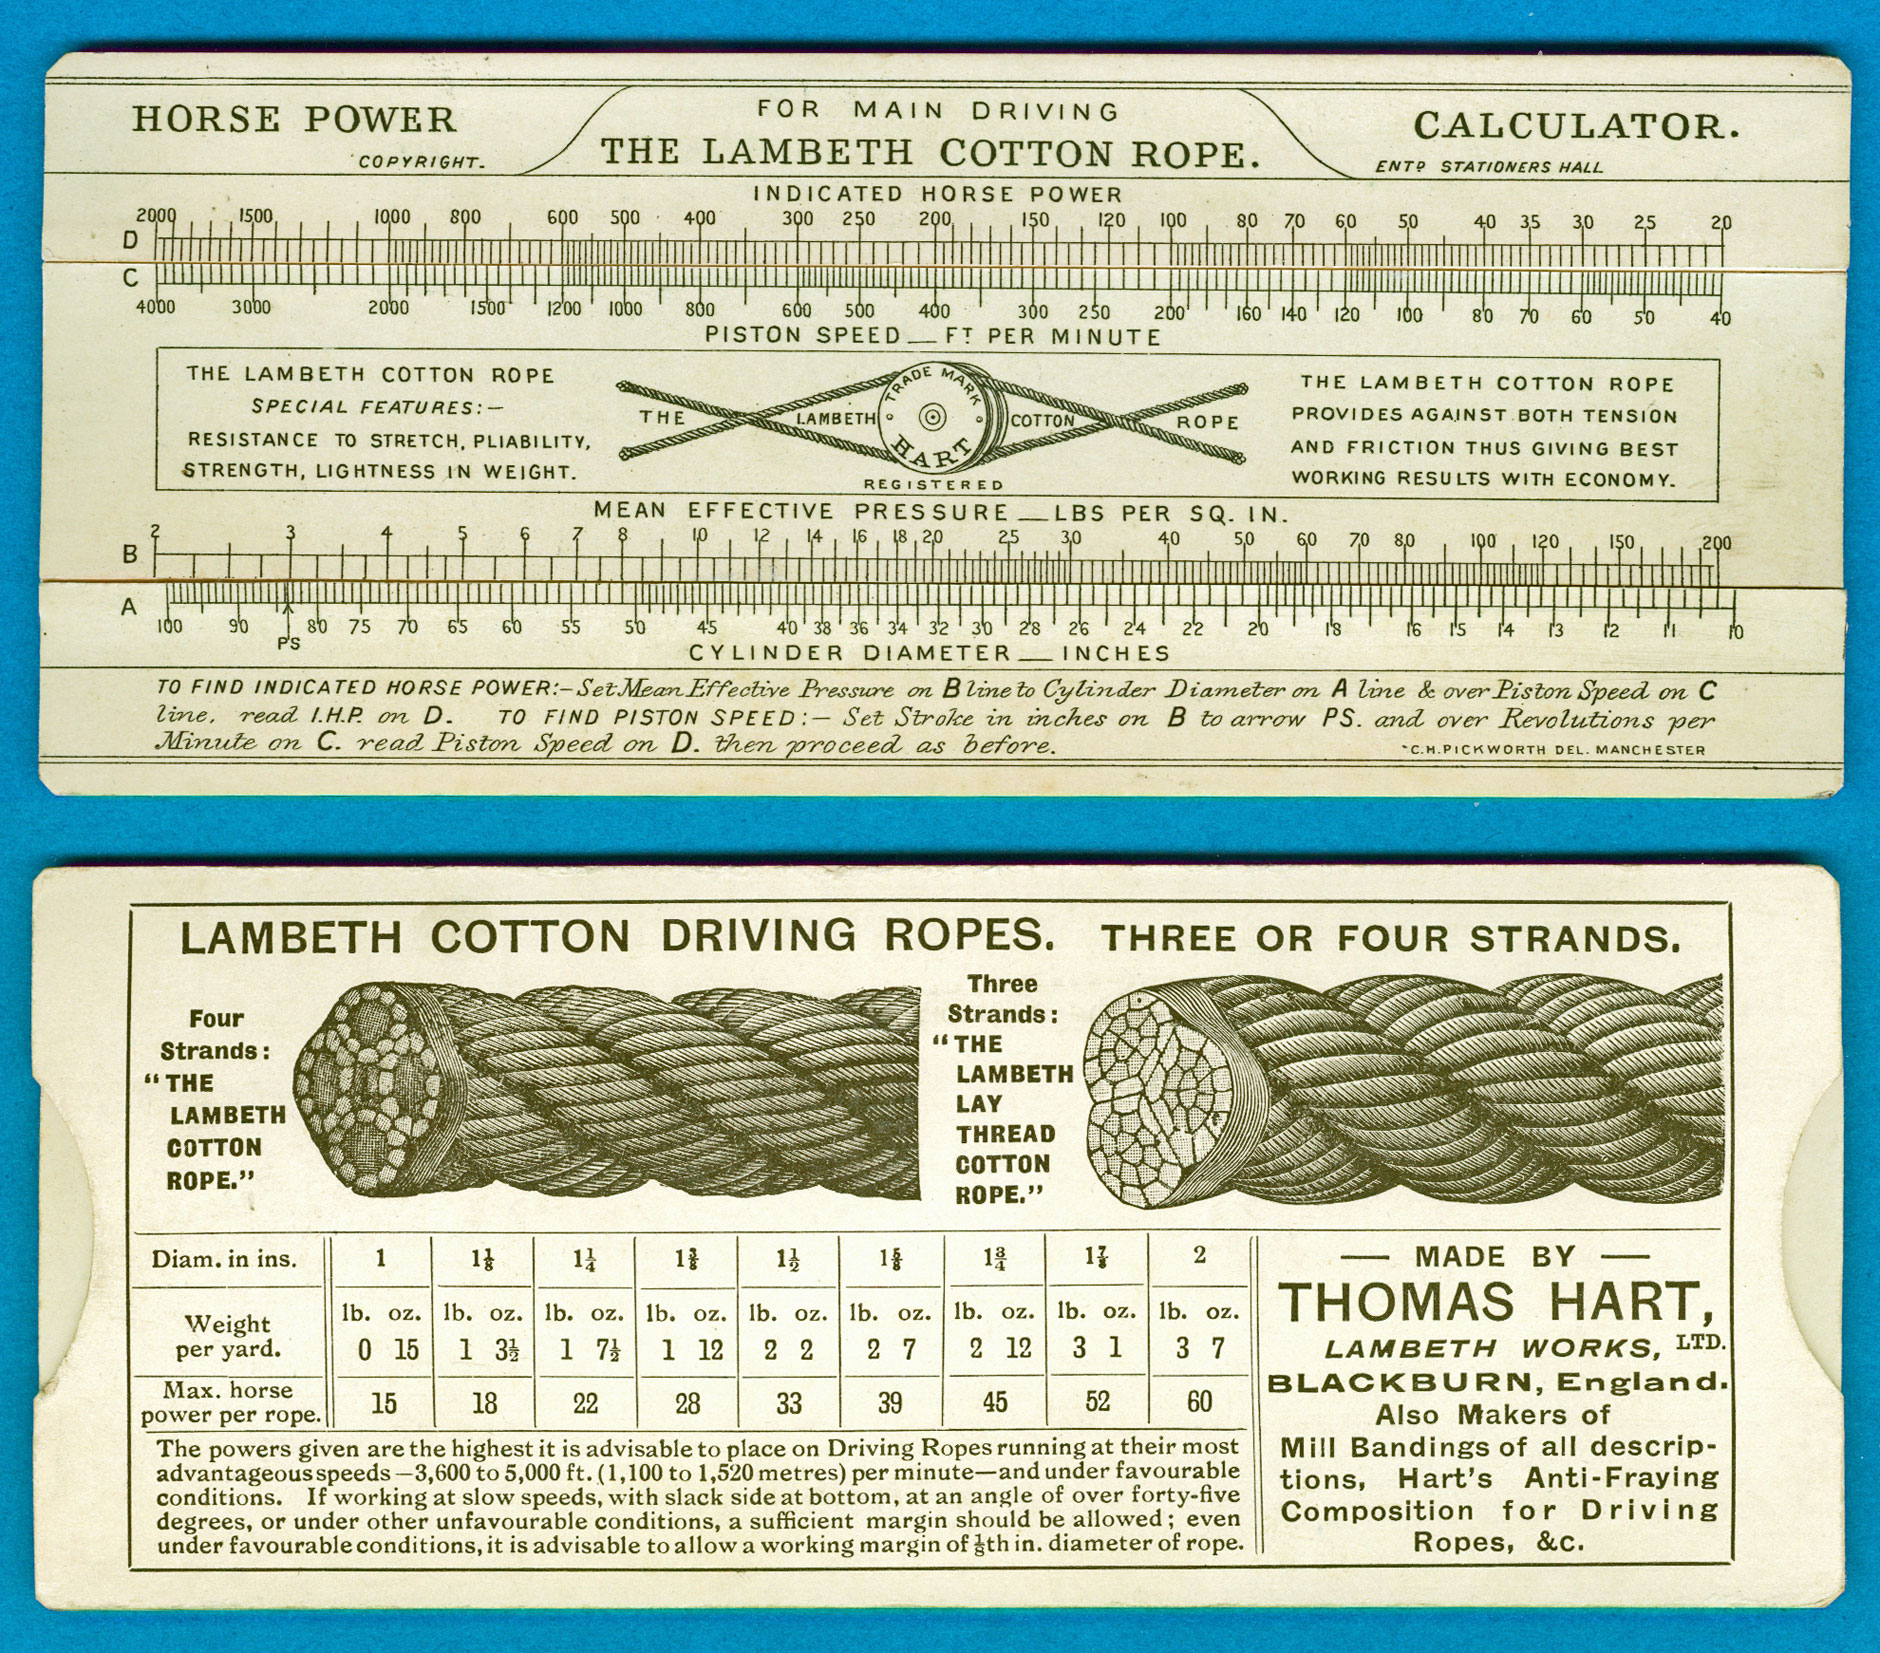 Thomas Hart Lambeth Horse Power Calculator